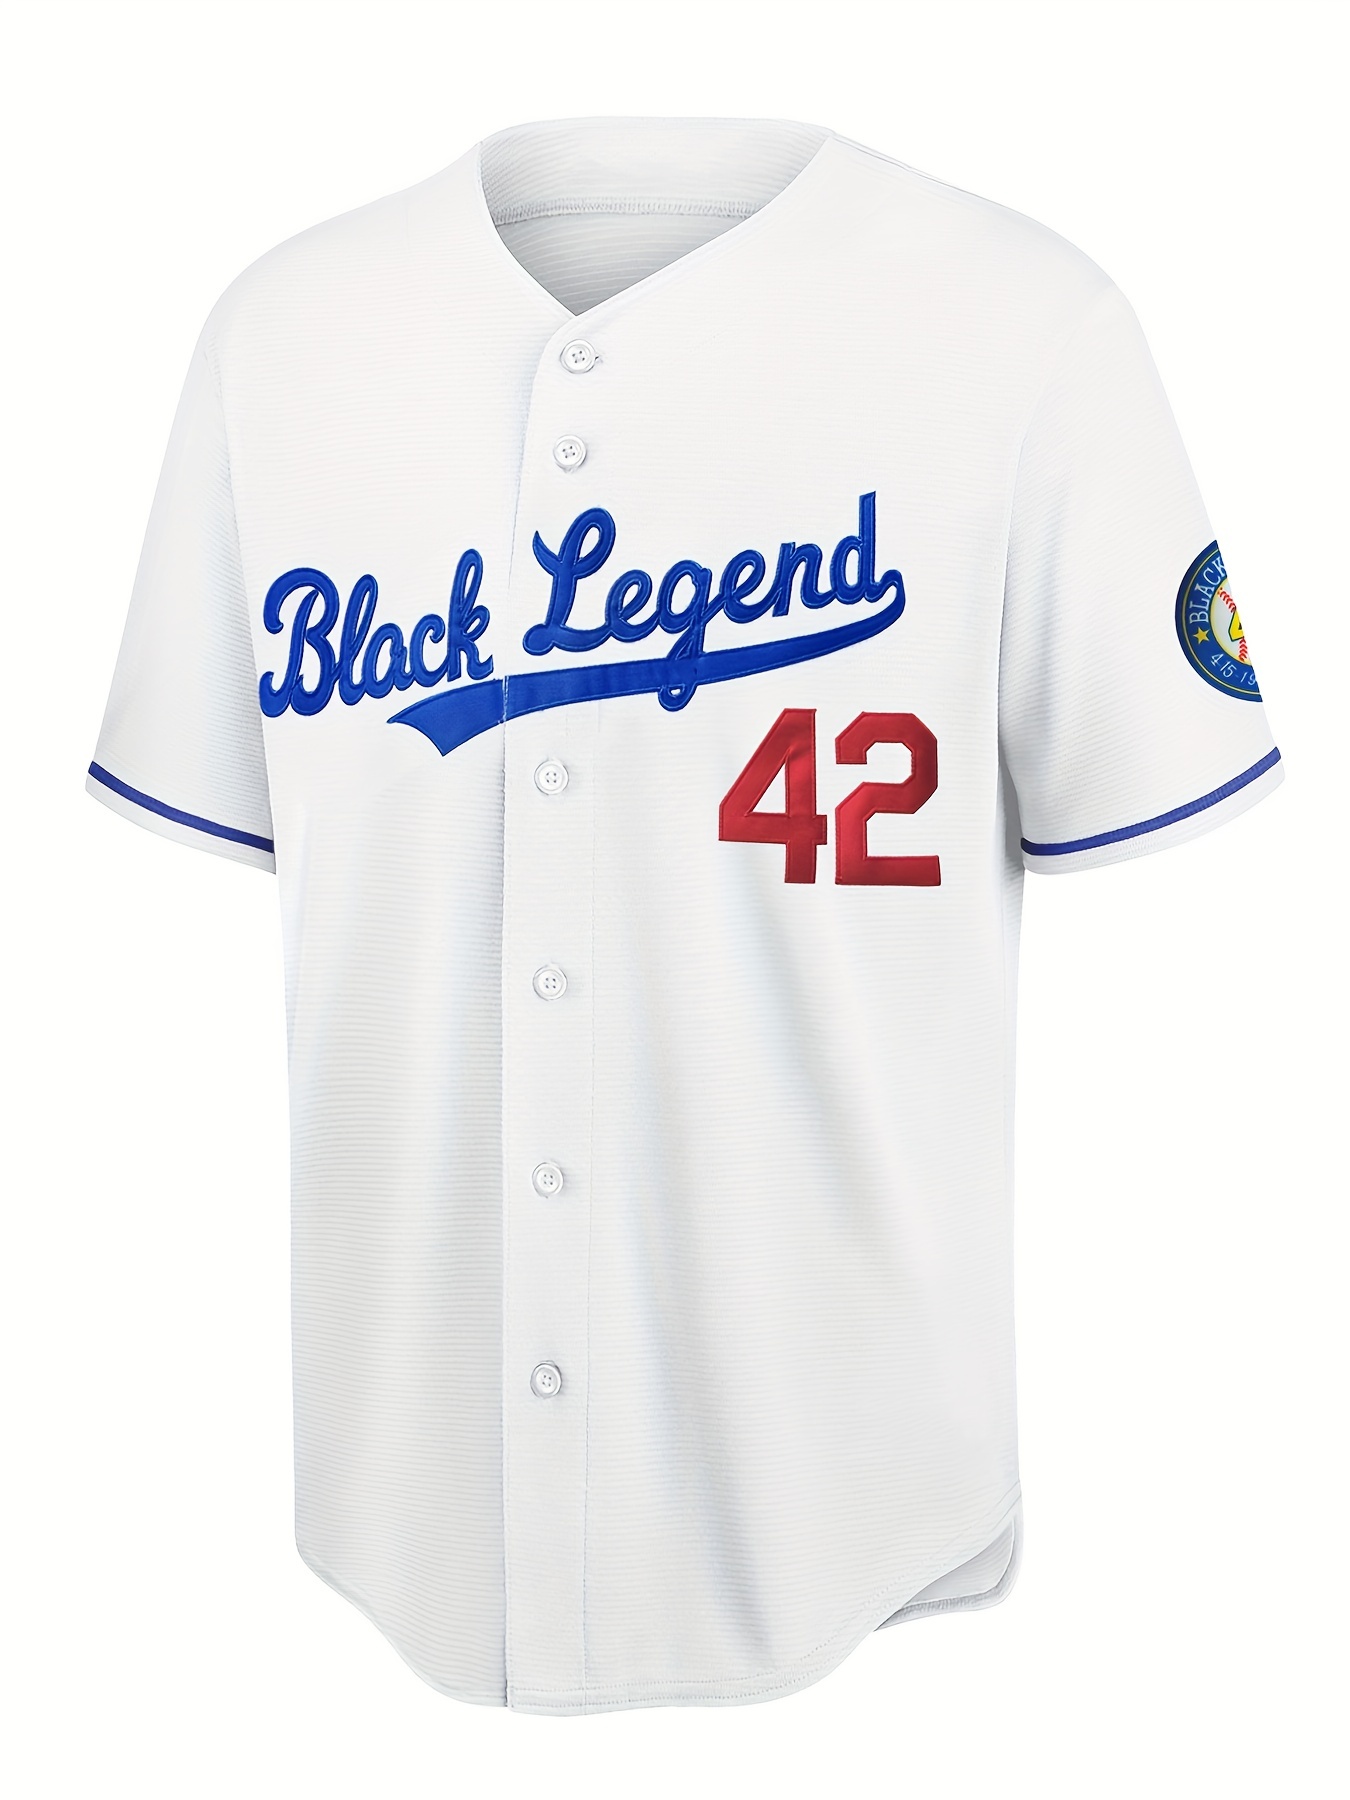 Men's Black Legend # 42 Classic Design Baseball Jersey, Retro